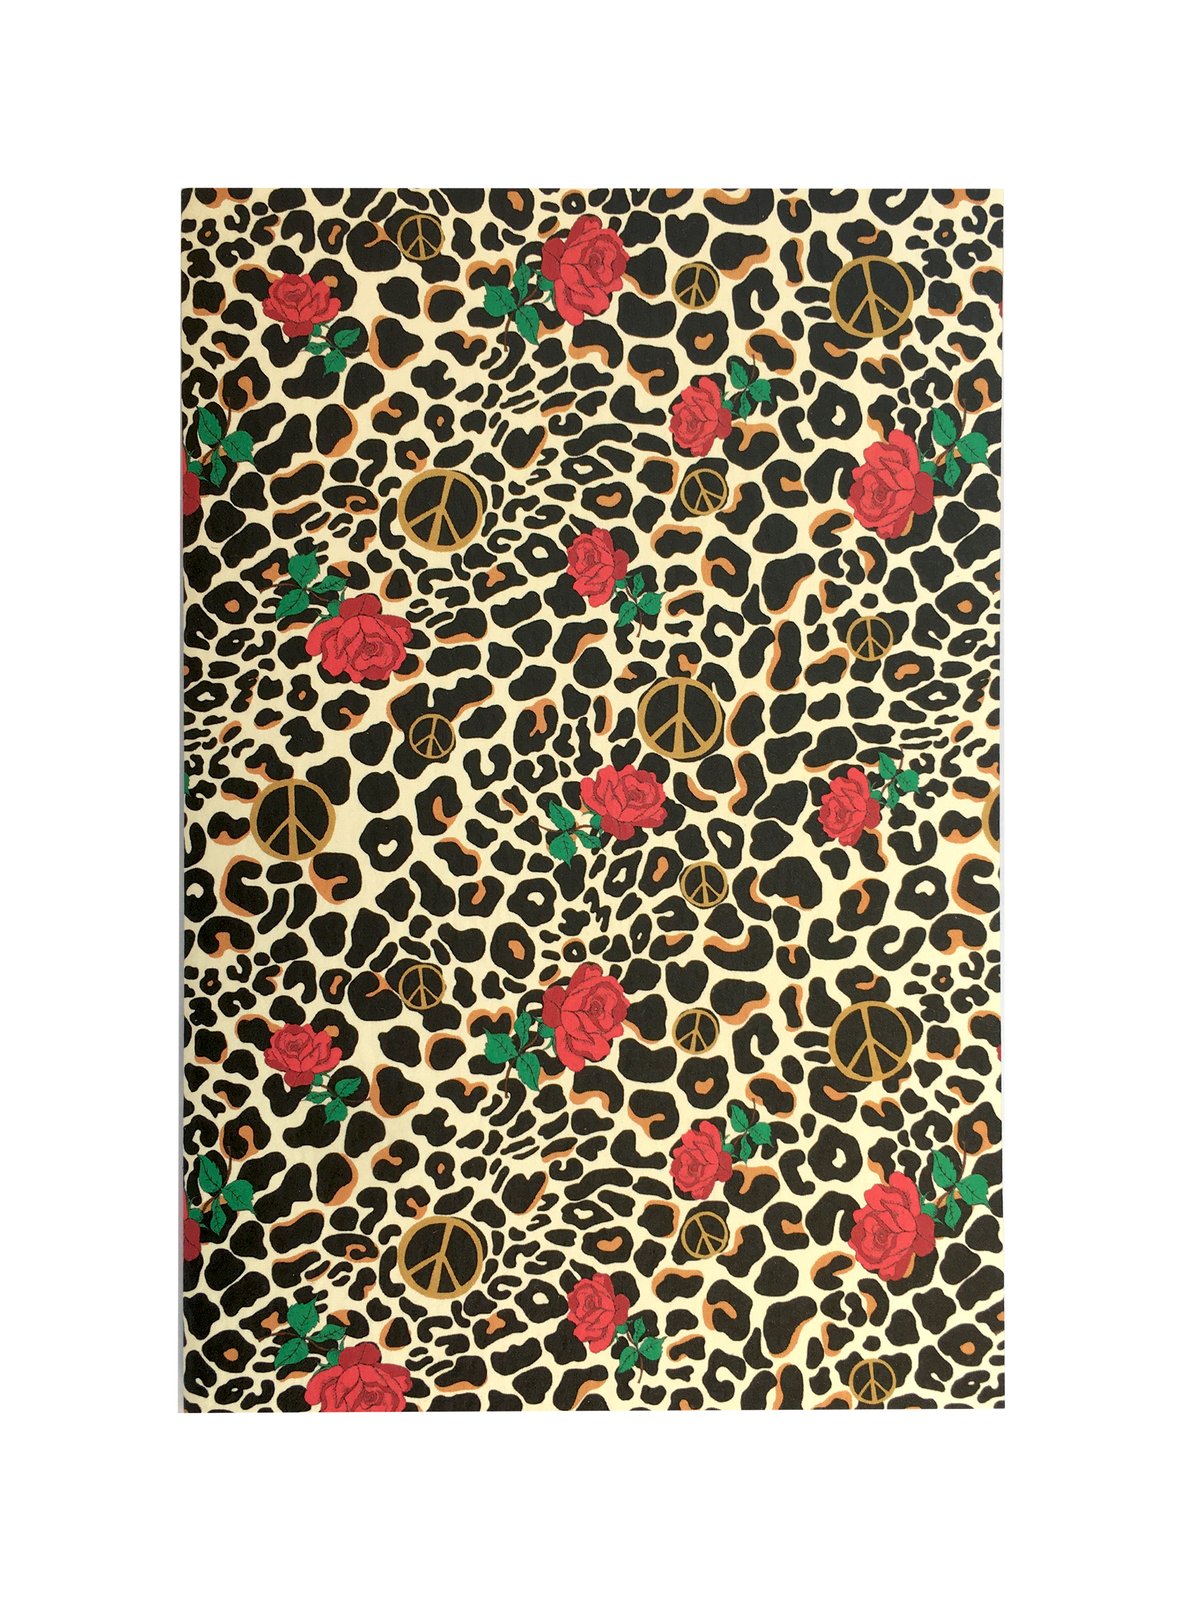 Peace Leopard Patterned A6 Notebook